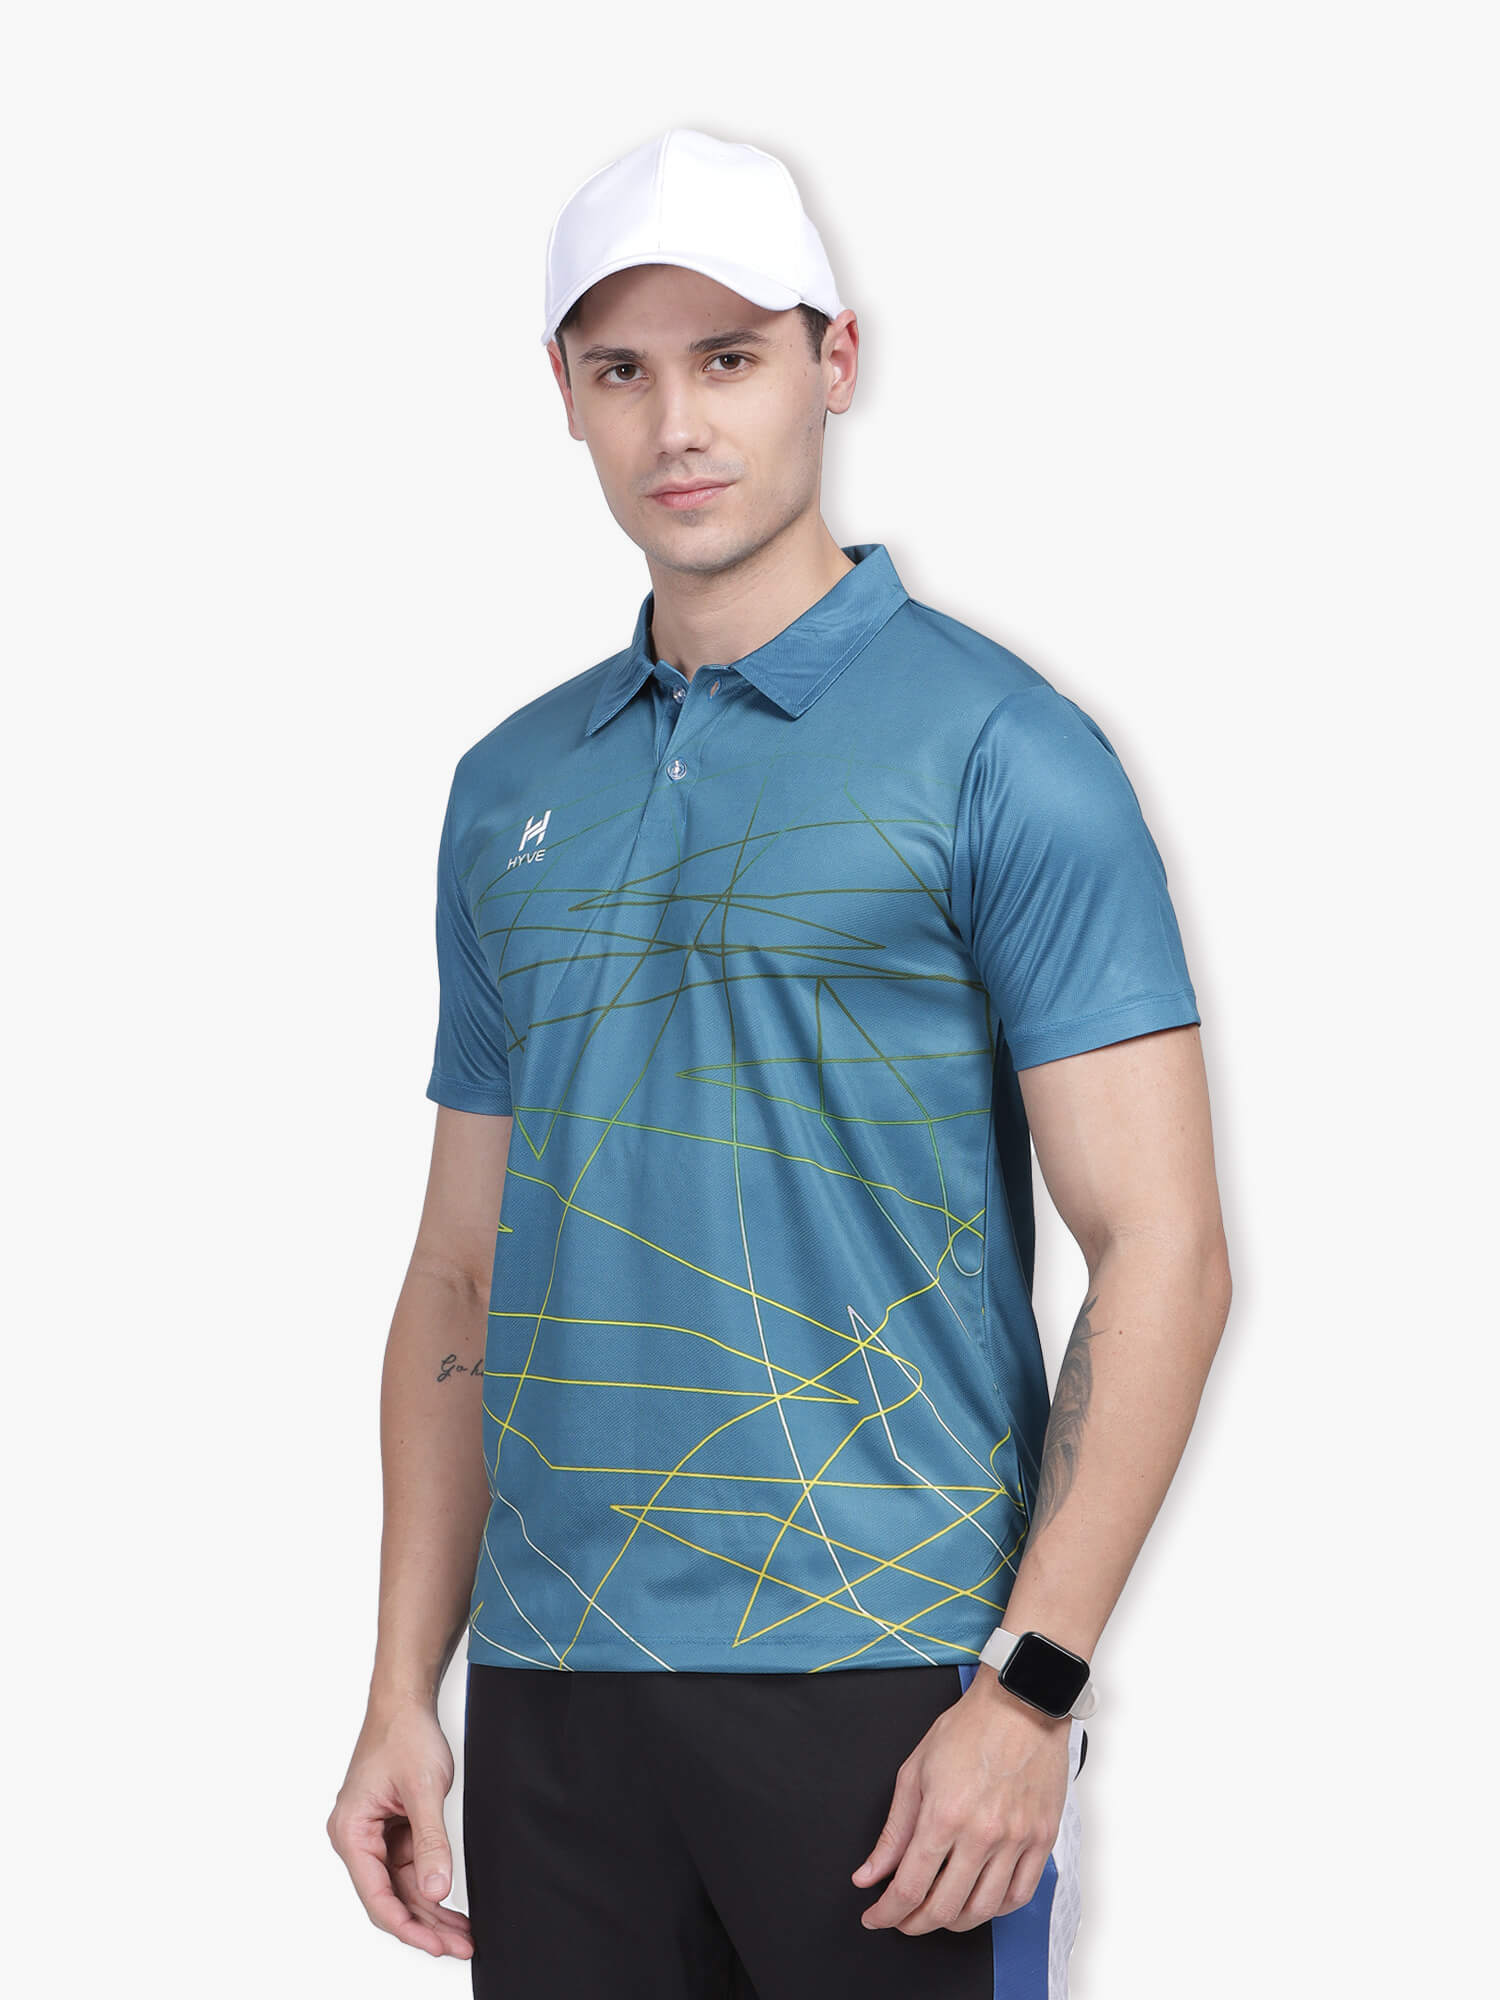 Cricket Sports Jersey Custom New Design Full Sleeve Stylish Cricket Shirt  Team Tops For Boys at Rs 650 | Basti Sheikh | Jalandhar | ID: 17336824262